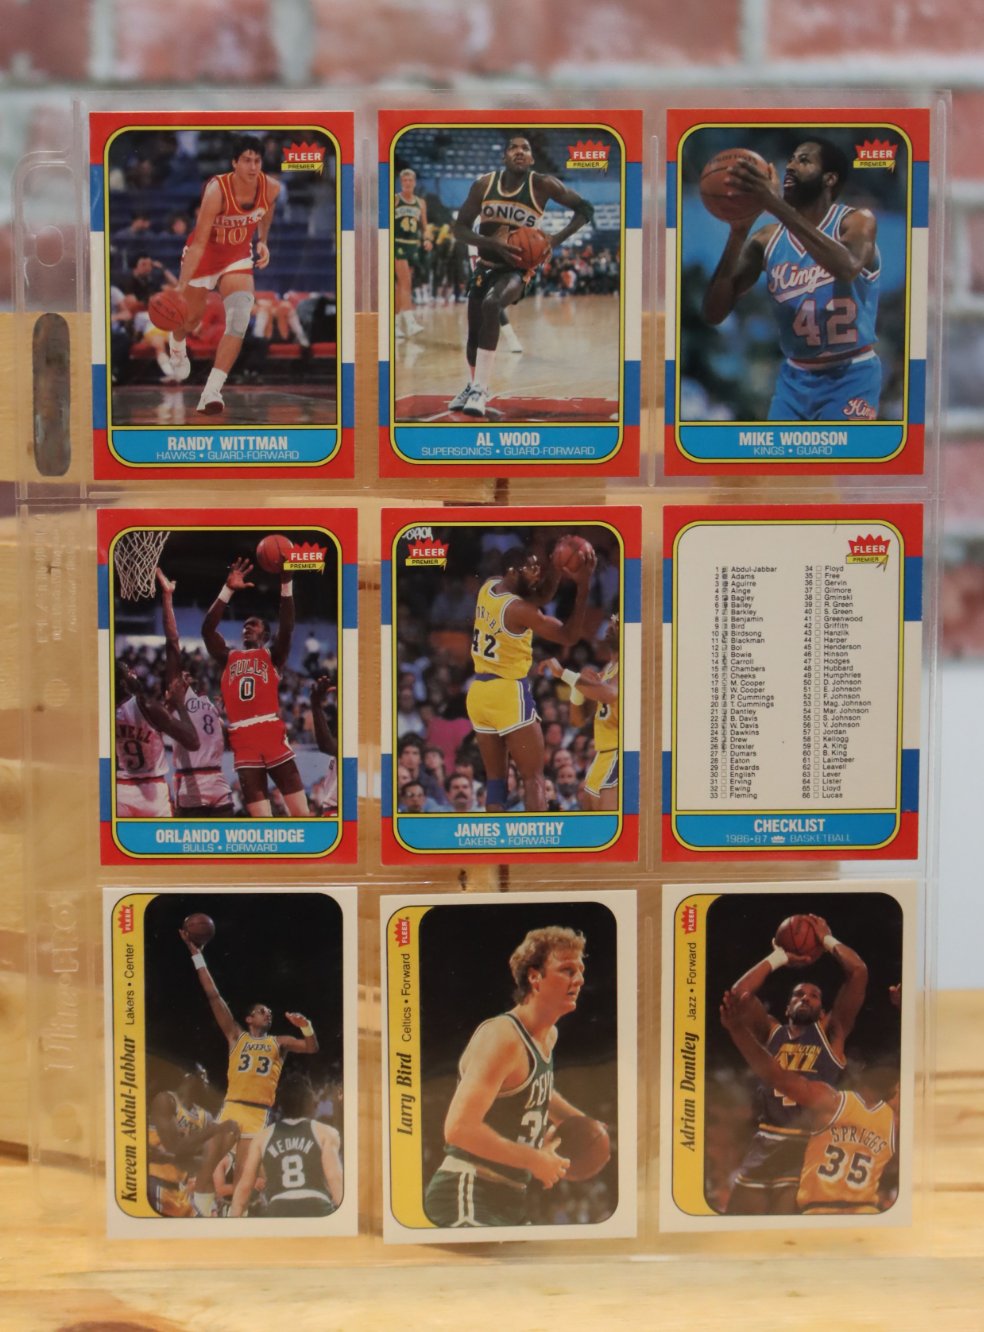 1986 Fleer Basketball Set Complete Including Michael Jordan Rookie Card, Stickers